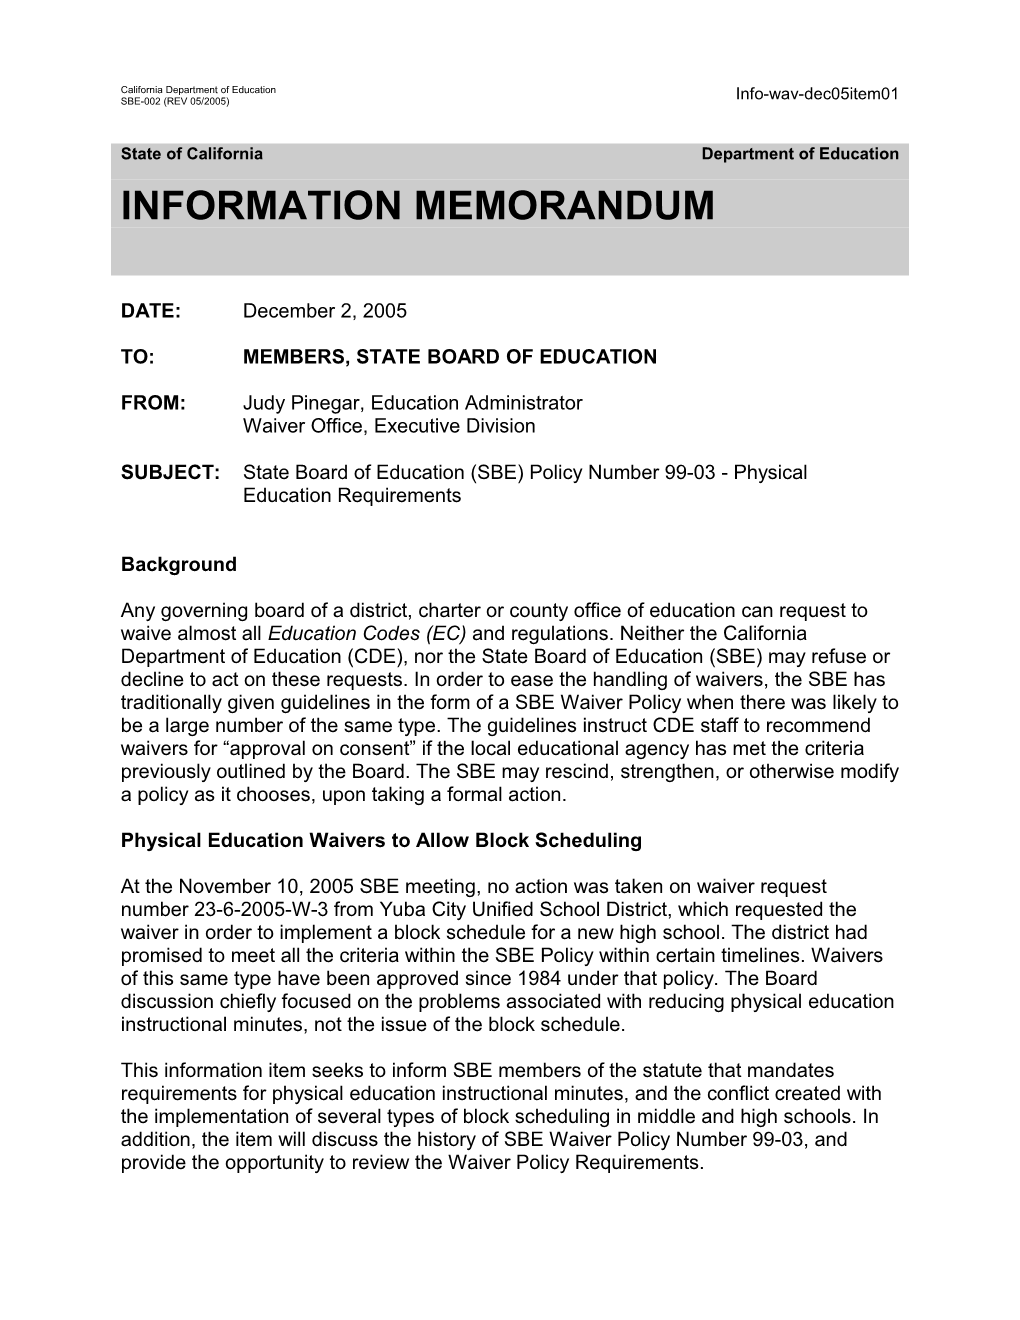 December 2005 Agenda Item 1 - Information Memorandum (CA State Board of Education)